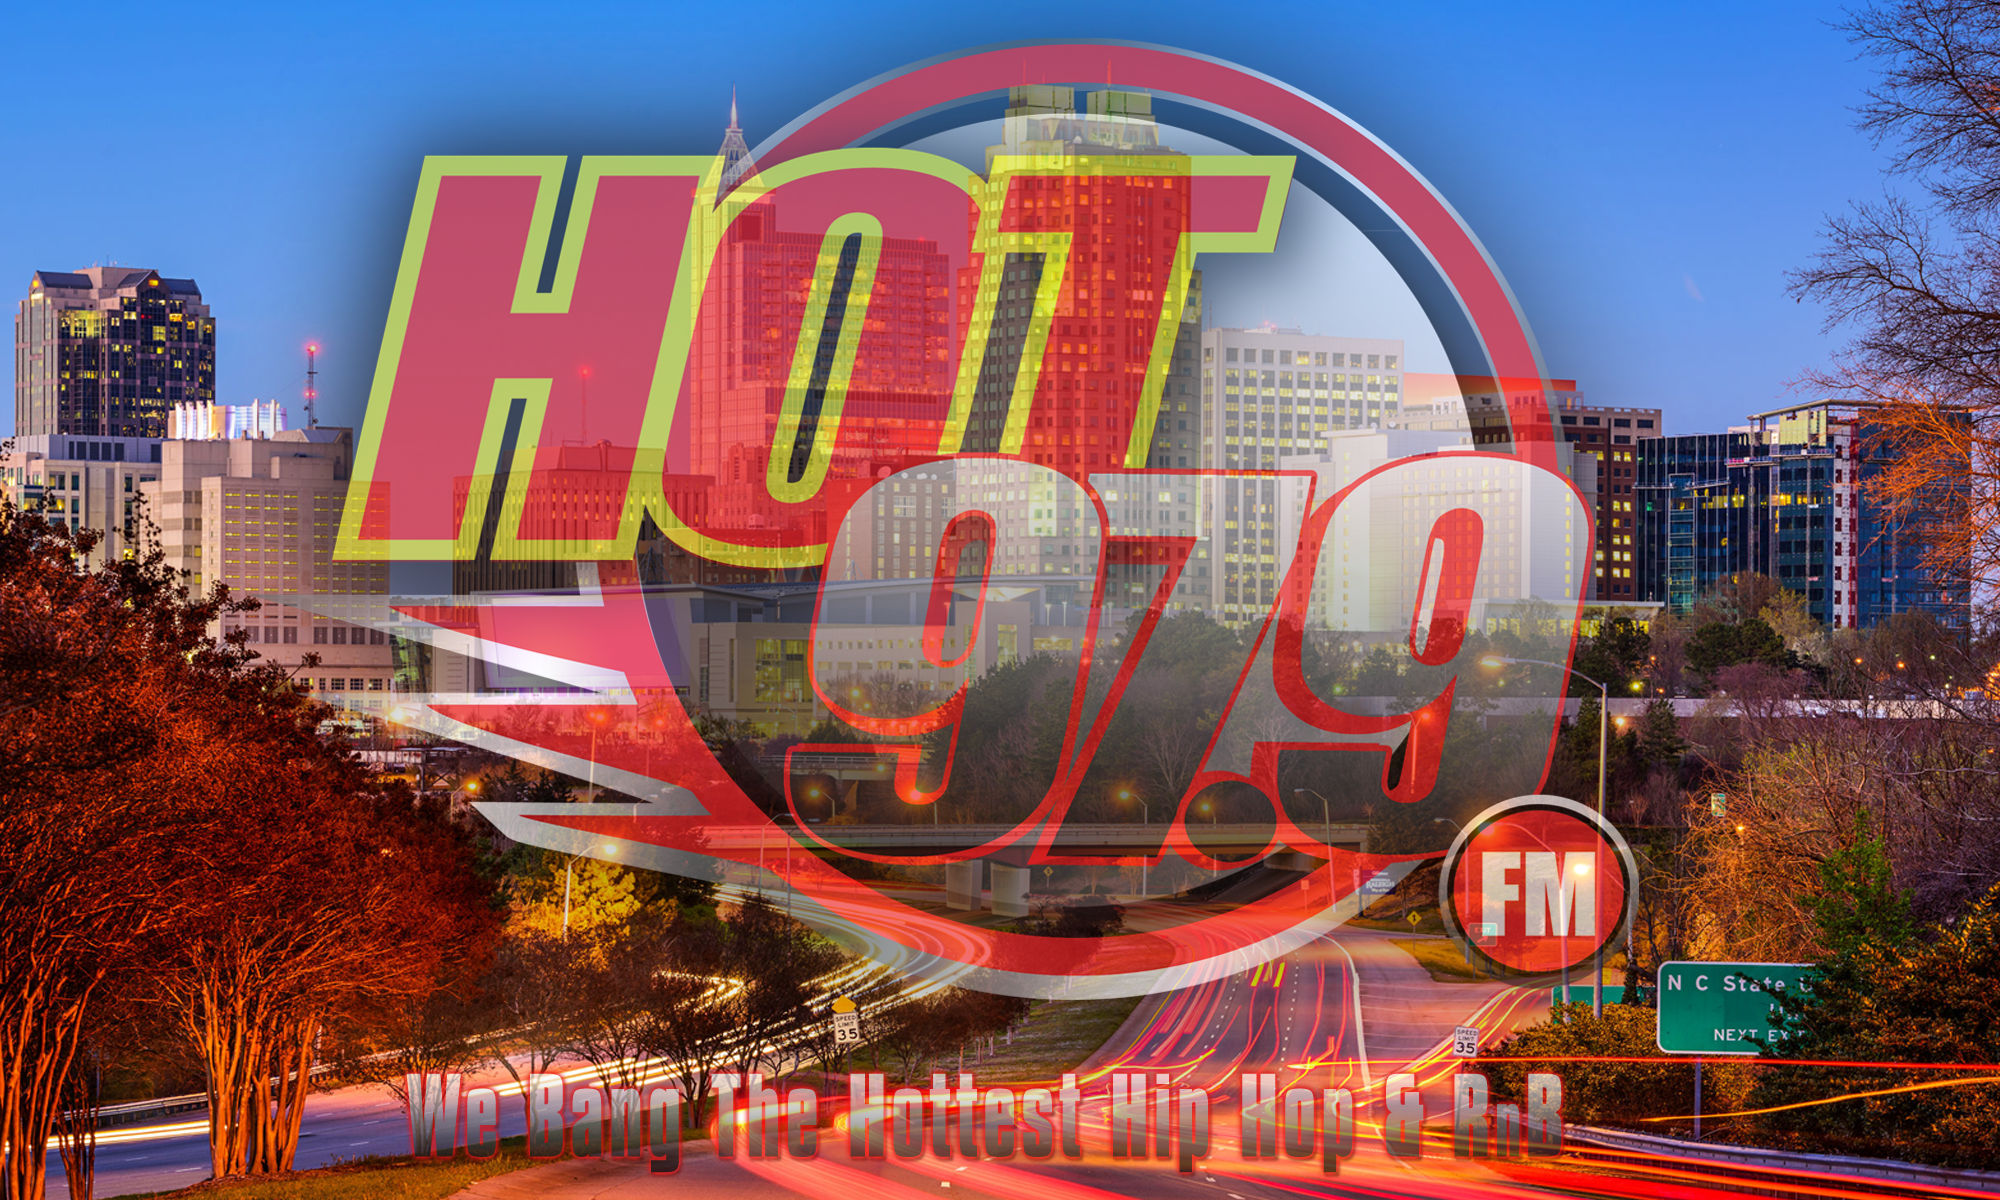 HOT97.9FM